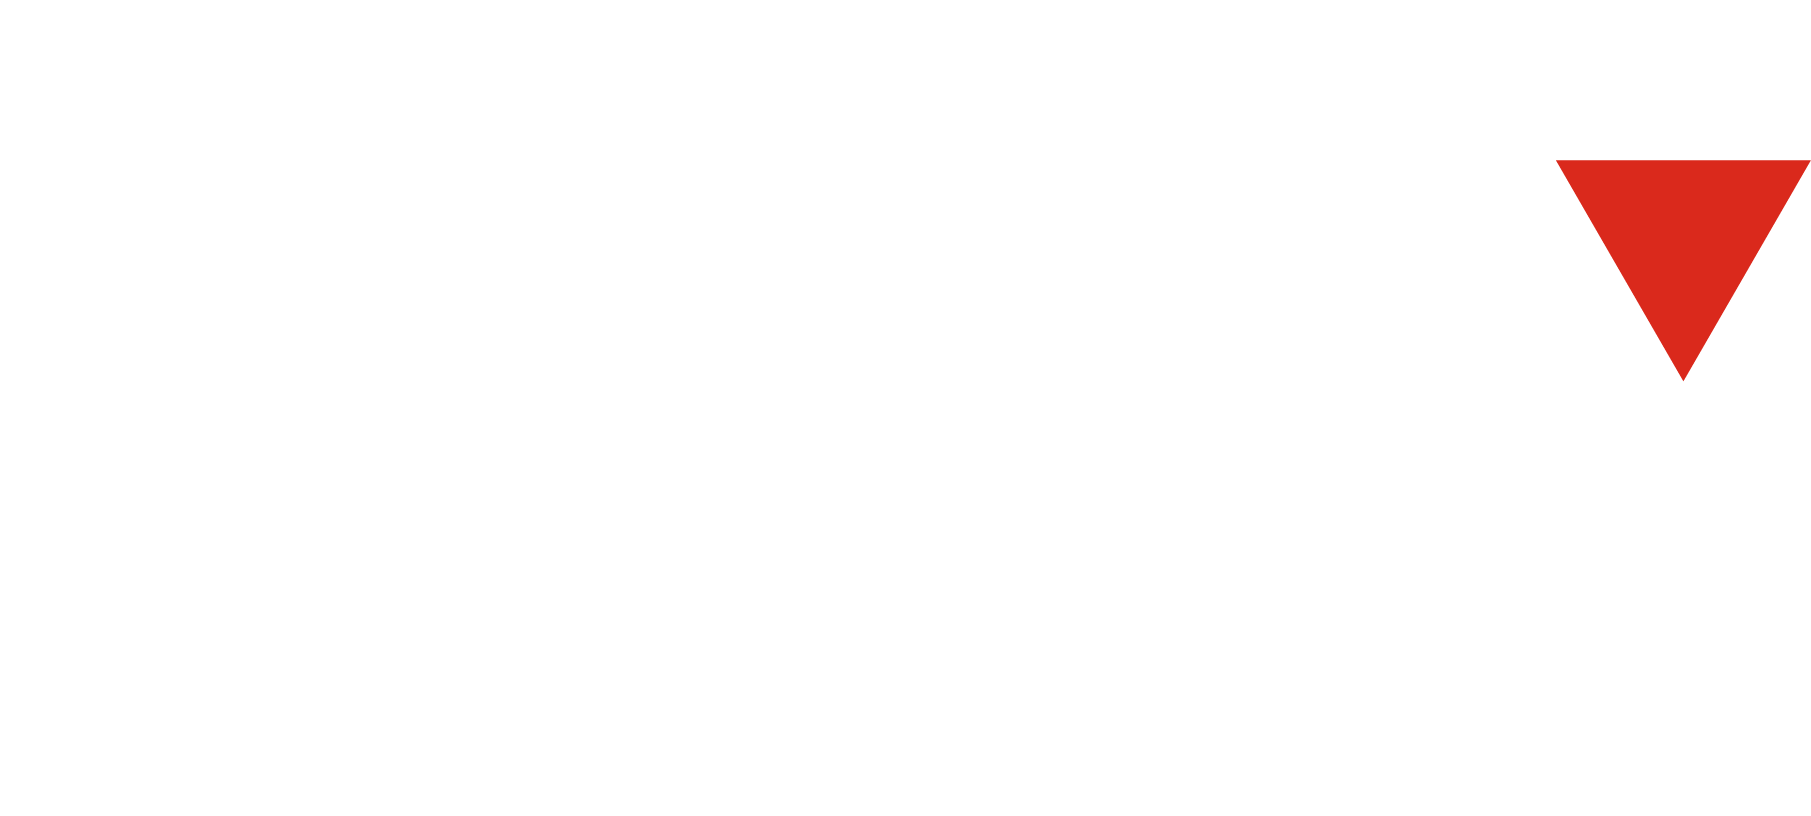 stv logo rgb white and red